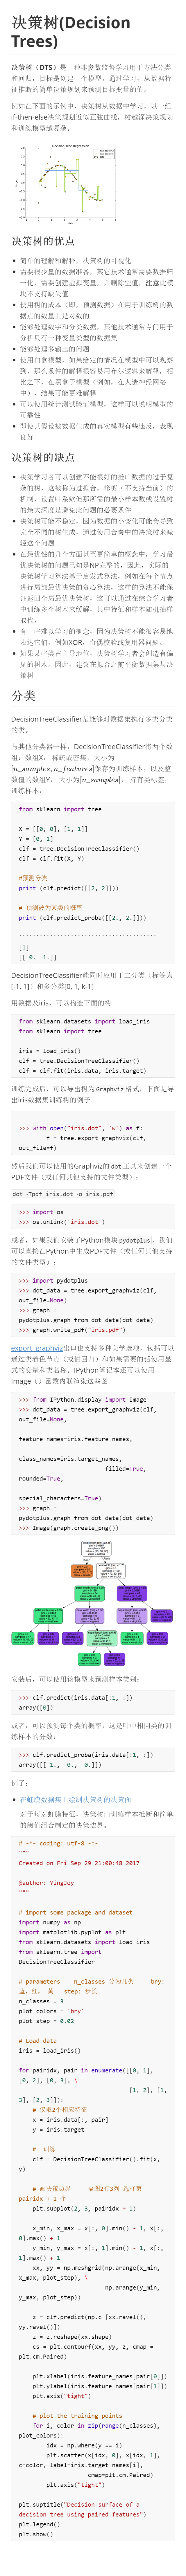 pmlls-Python-ML-Library-sklearn-p4